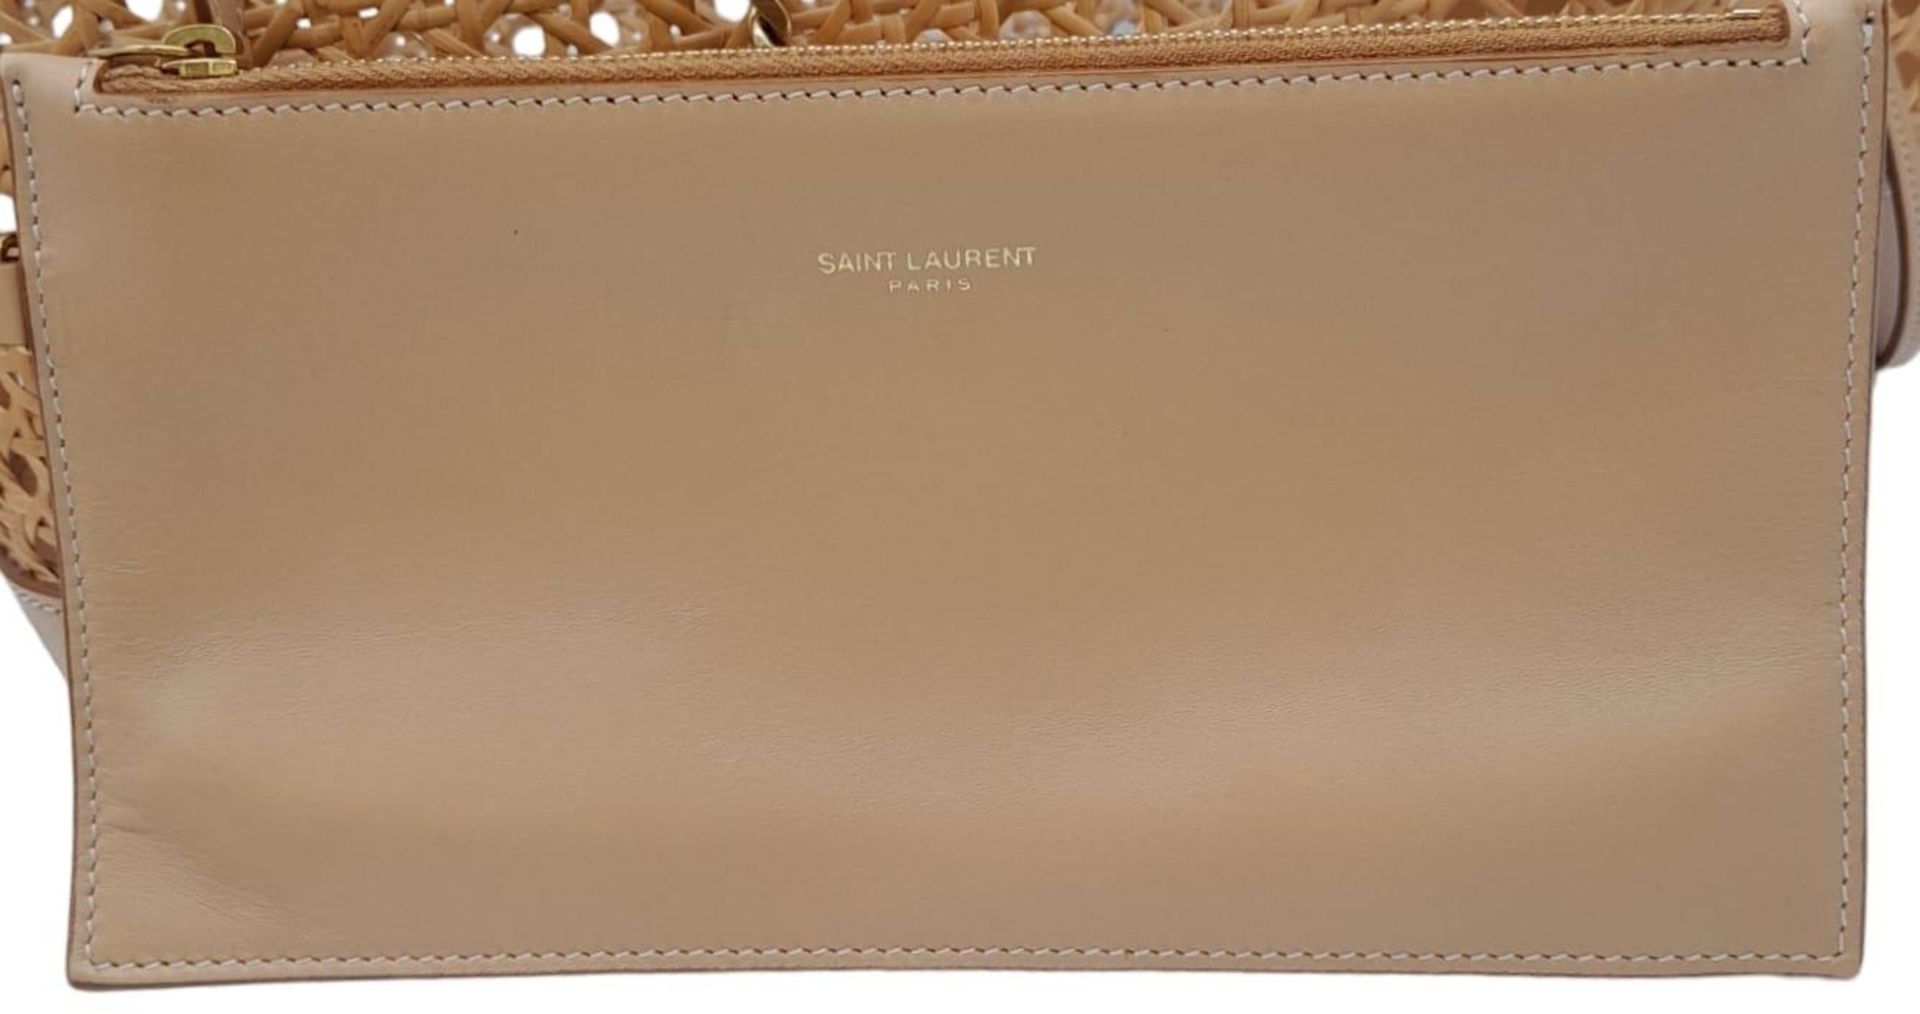 A Saint Laurent Beige Tote Bag. Woven rattan and leather trim exterior. Magnetic closure, gold-toned - Bild 9 aus 12